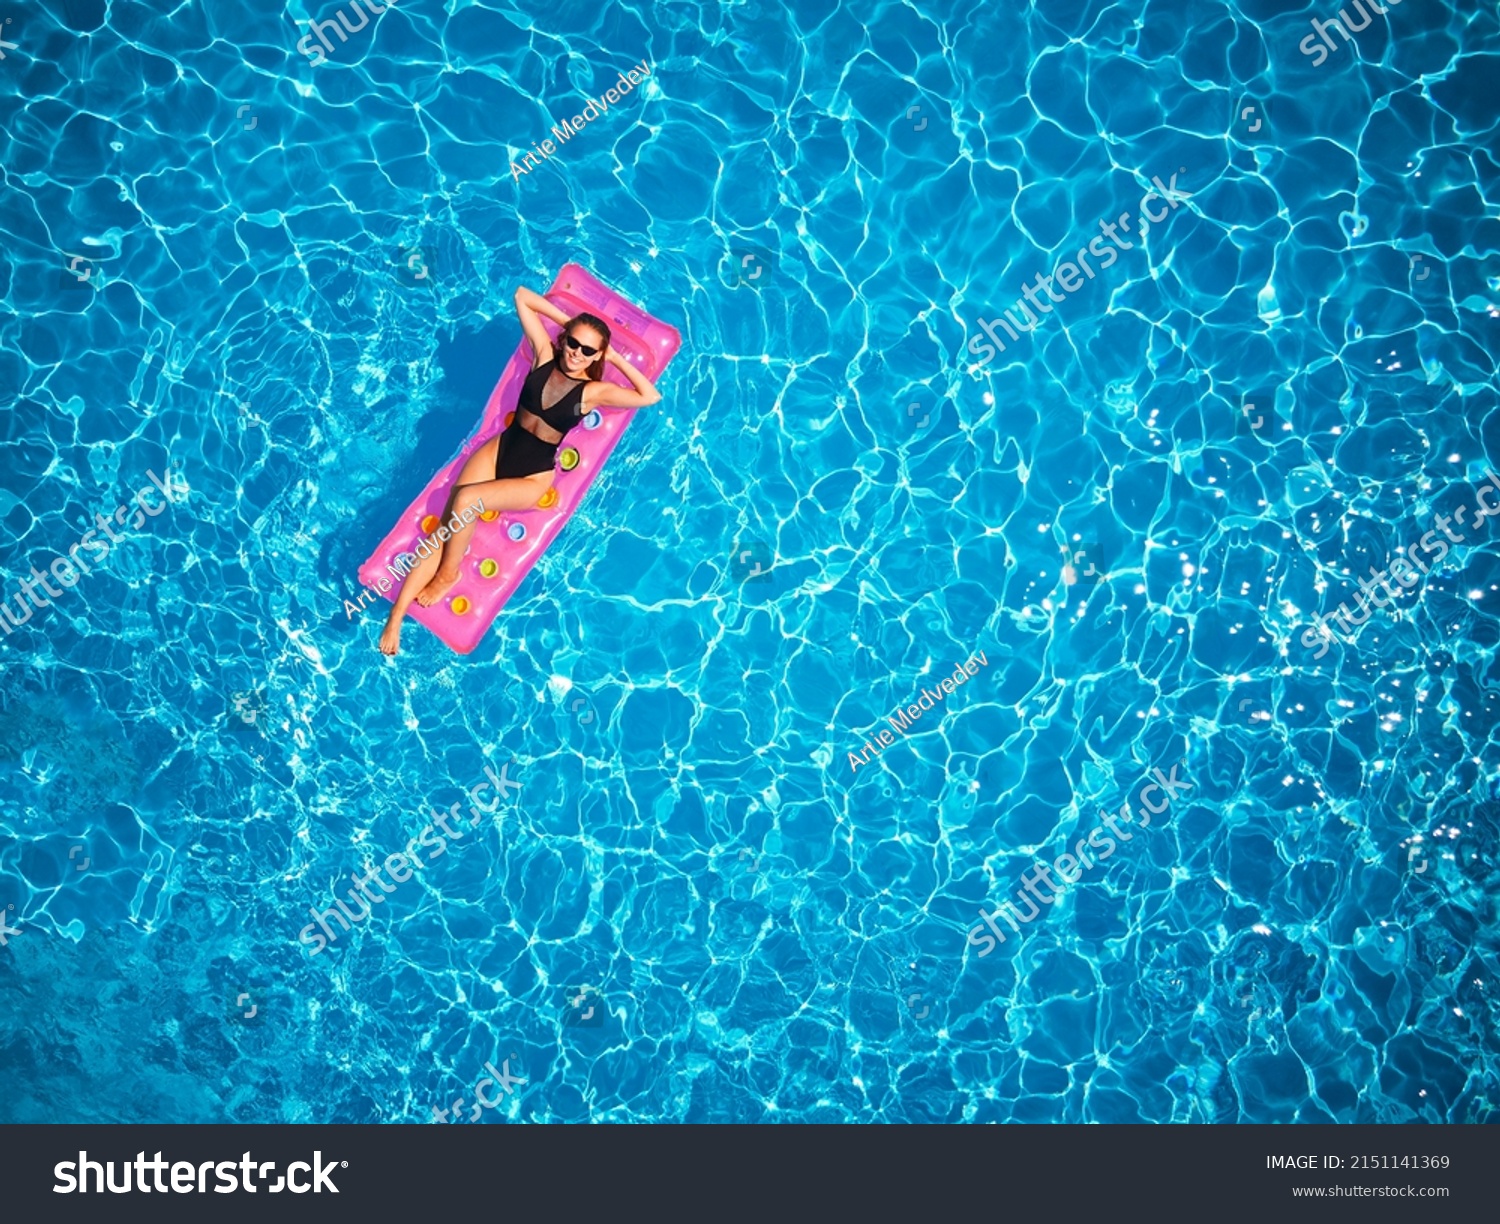 241,977 Hot girl beach Images, Stock Photos & Vectors | Shutterstock